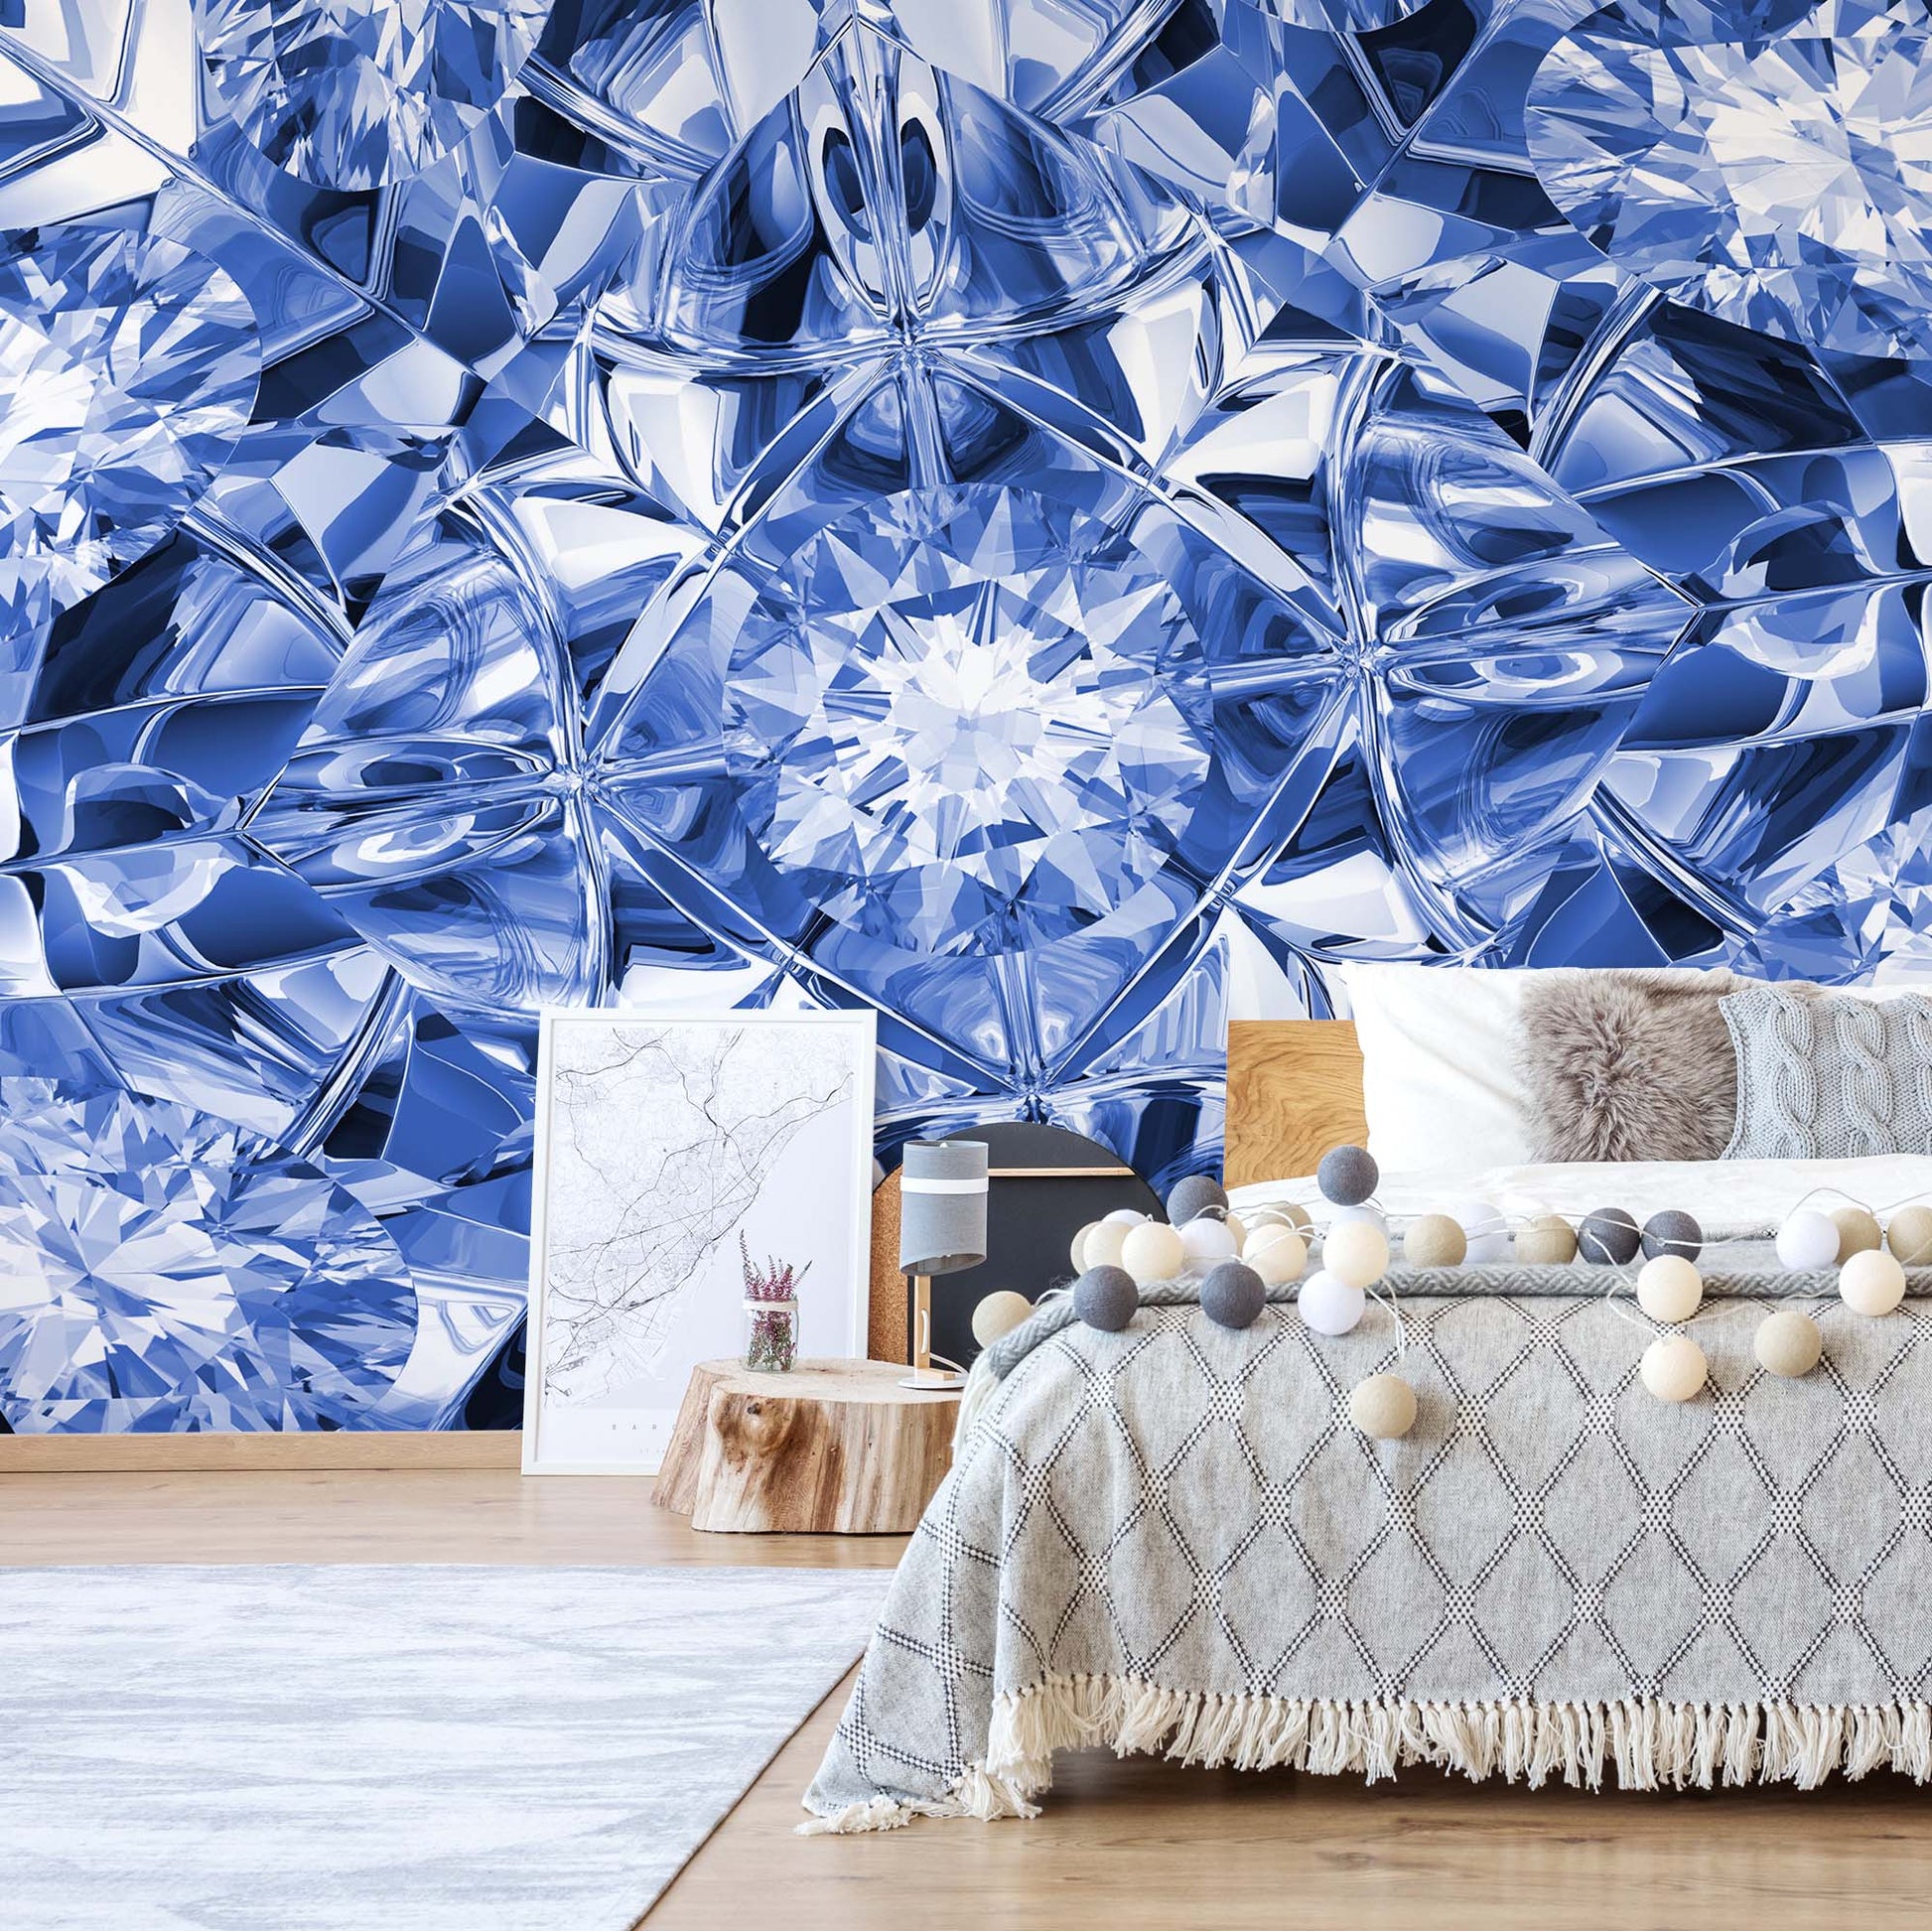 Facets of Luxury in Blue Wallpaper Waterproof for Rooms Bathroom Kitchen - USTAD HOME